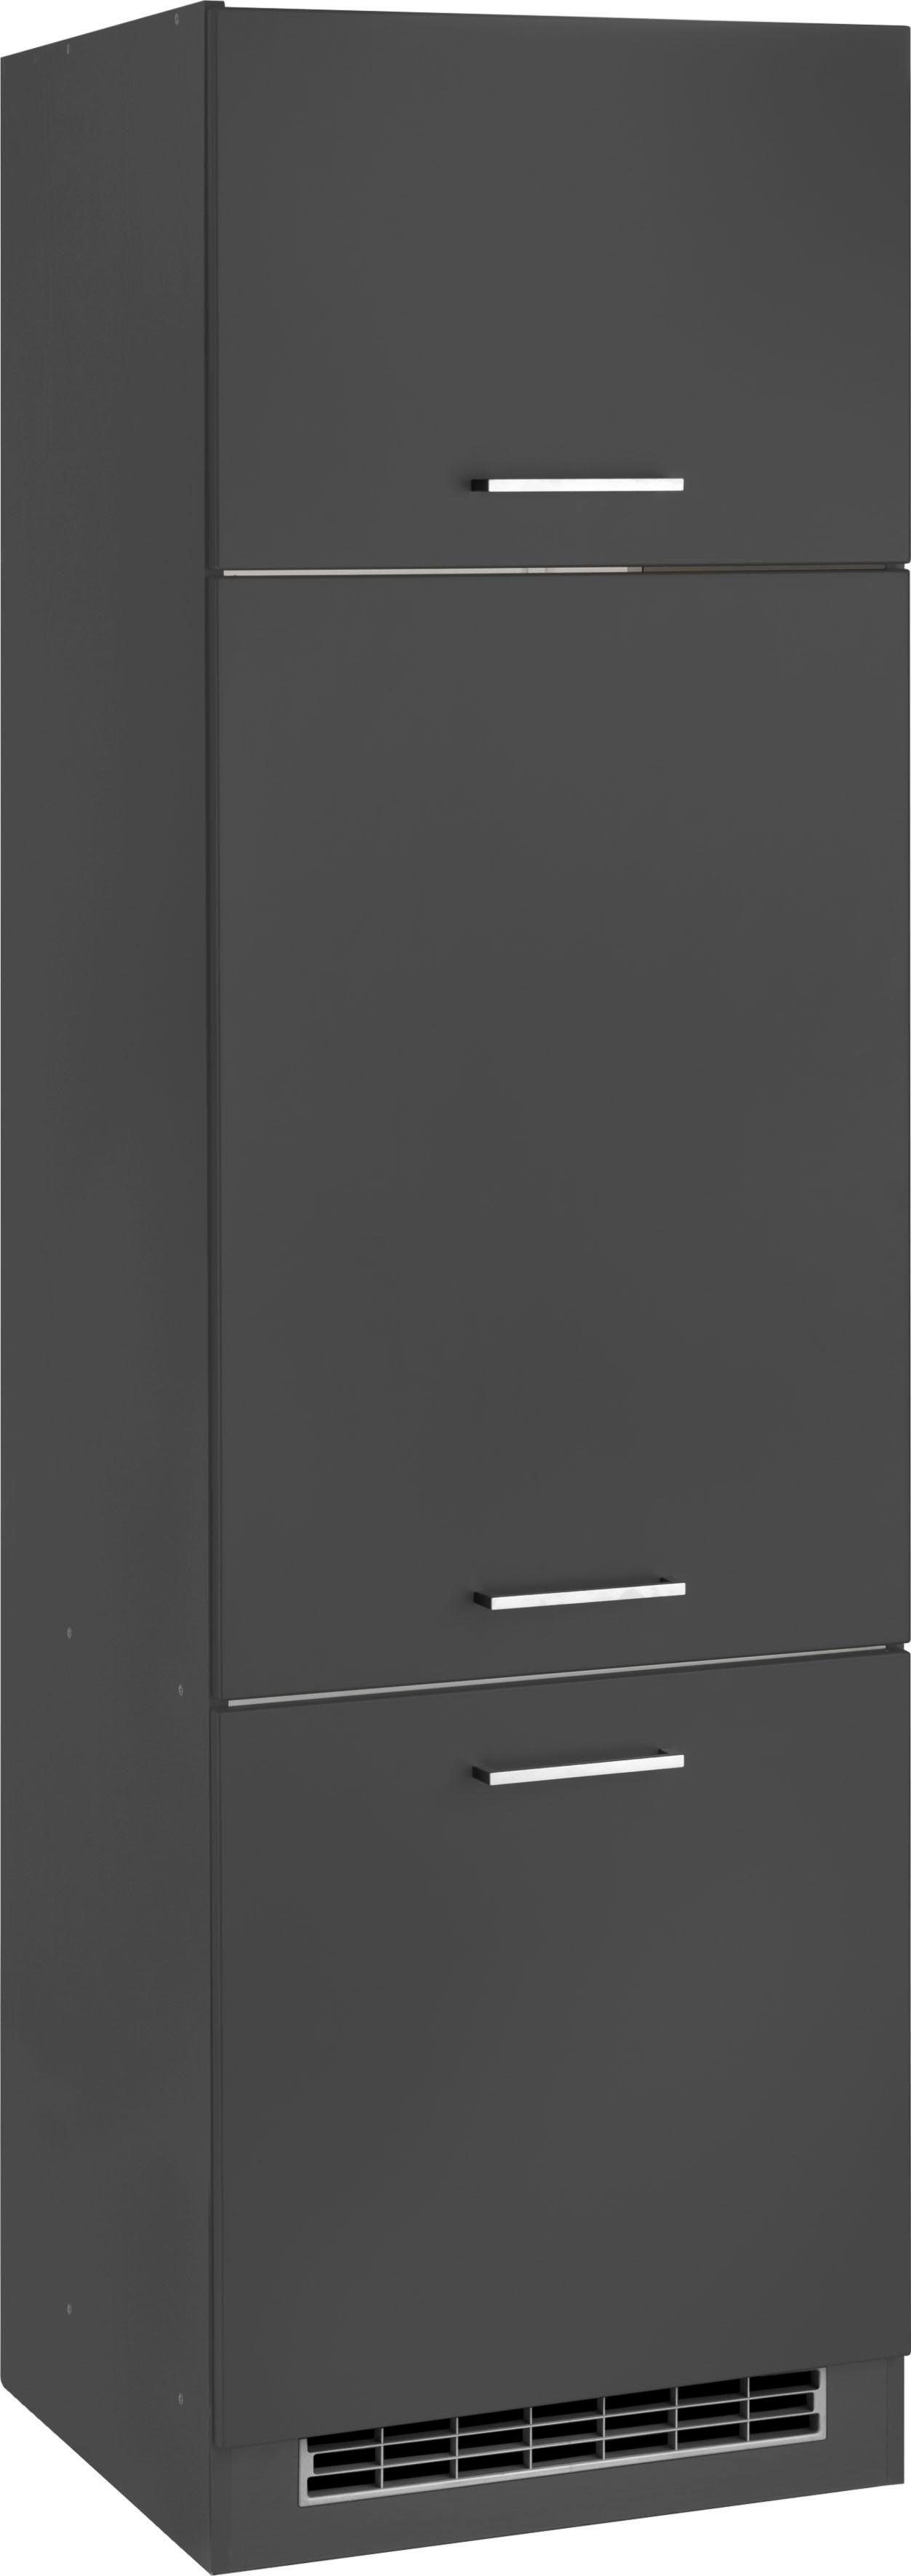 HELD MÖBEL Kühlumbauschrank 88cm Einbaukühlschrank, für Kehl | Nischenhöhe grafit grau